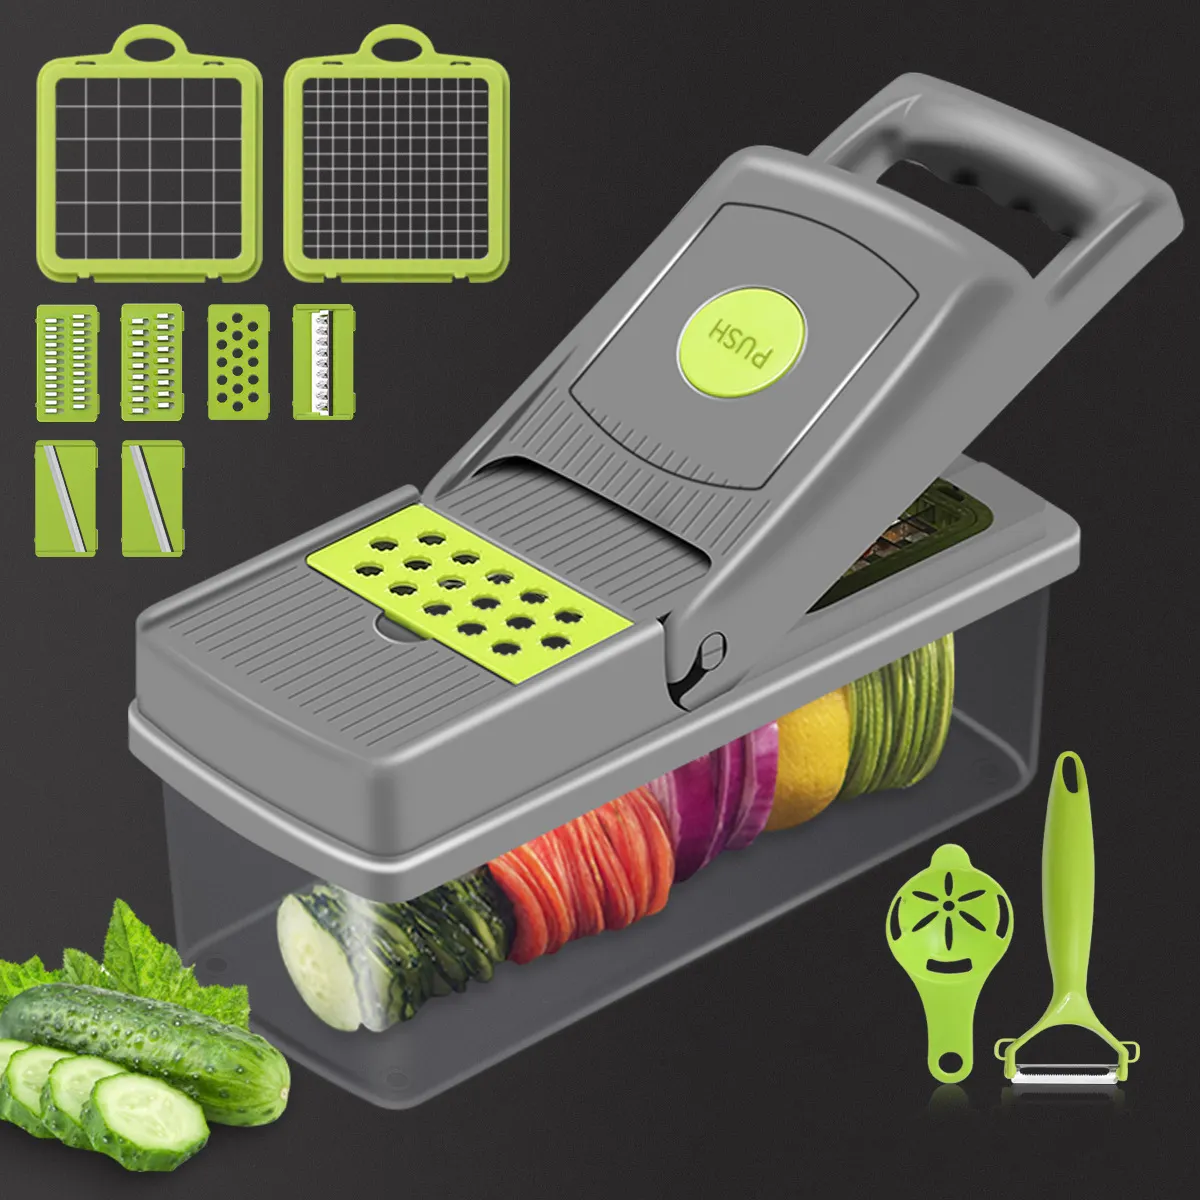 Kitchen Accessories 12 in 1 Food Dicer Onion Fruit Veggie Chopper Manual Mandoline Slicer Multifunctional Vegetable Cutter